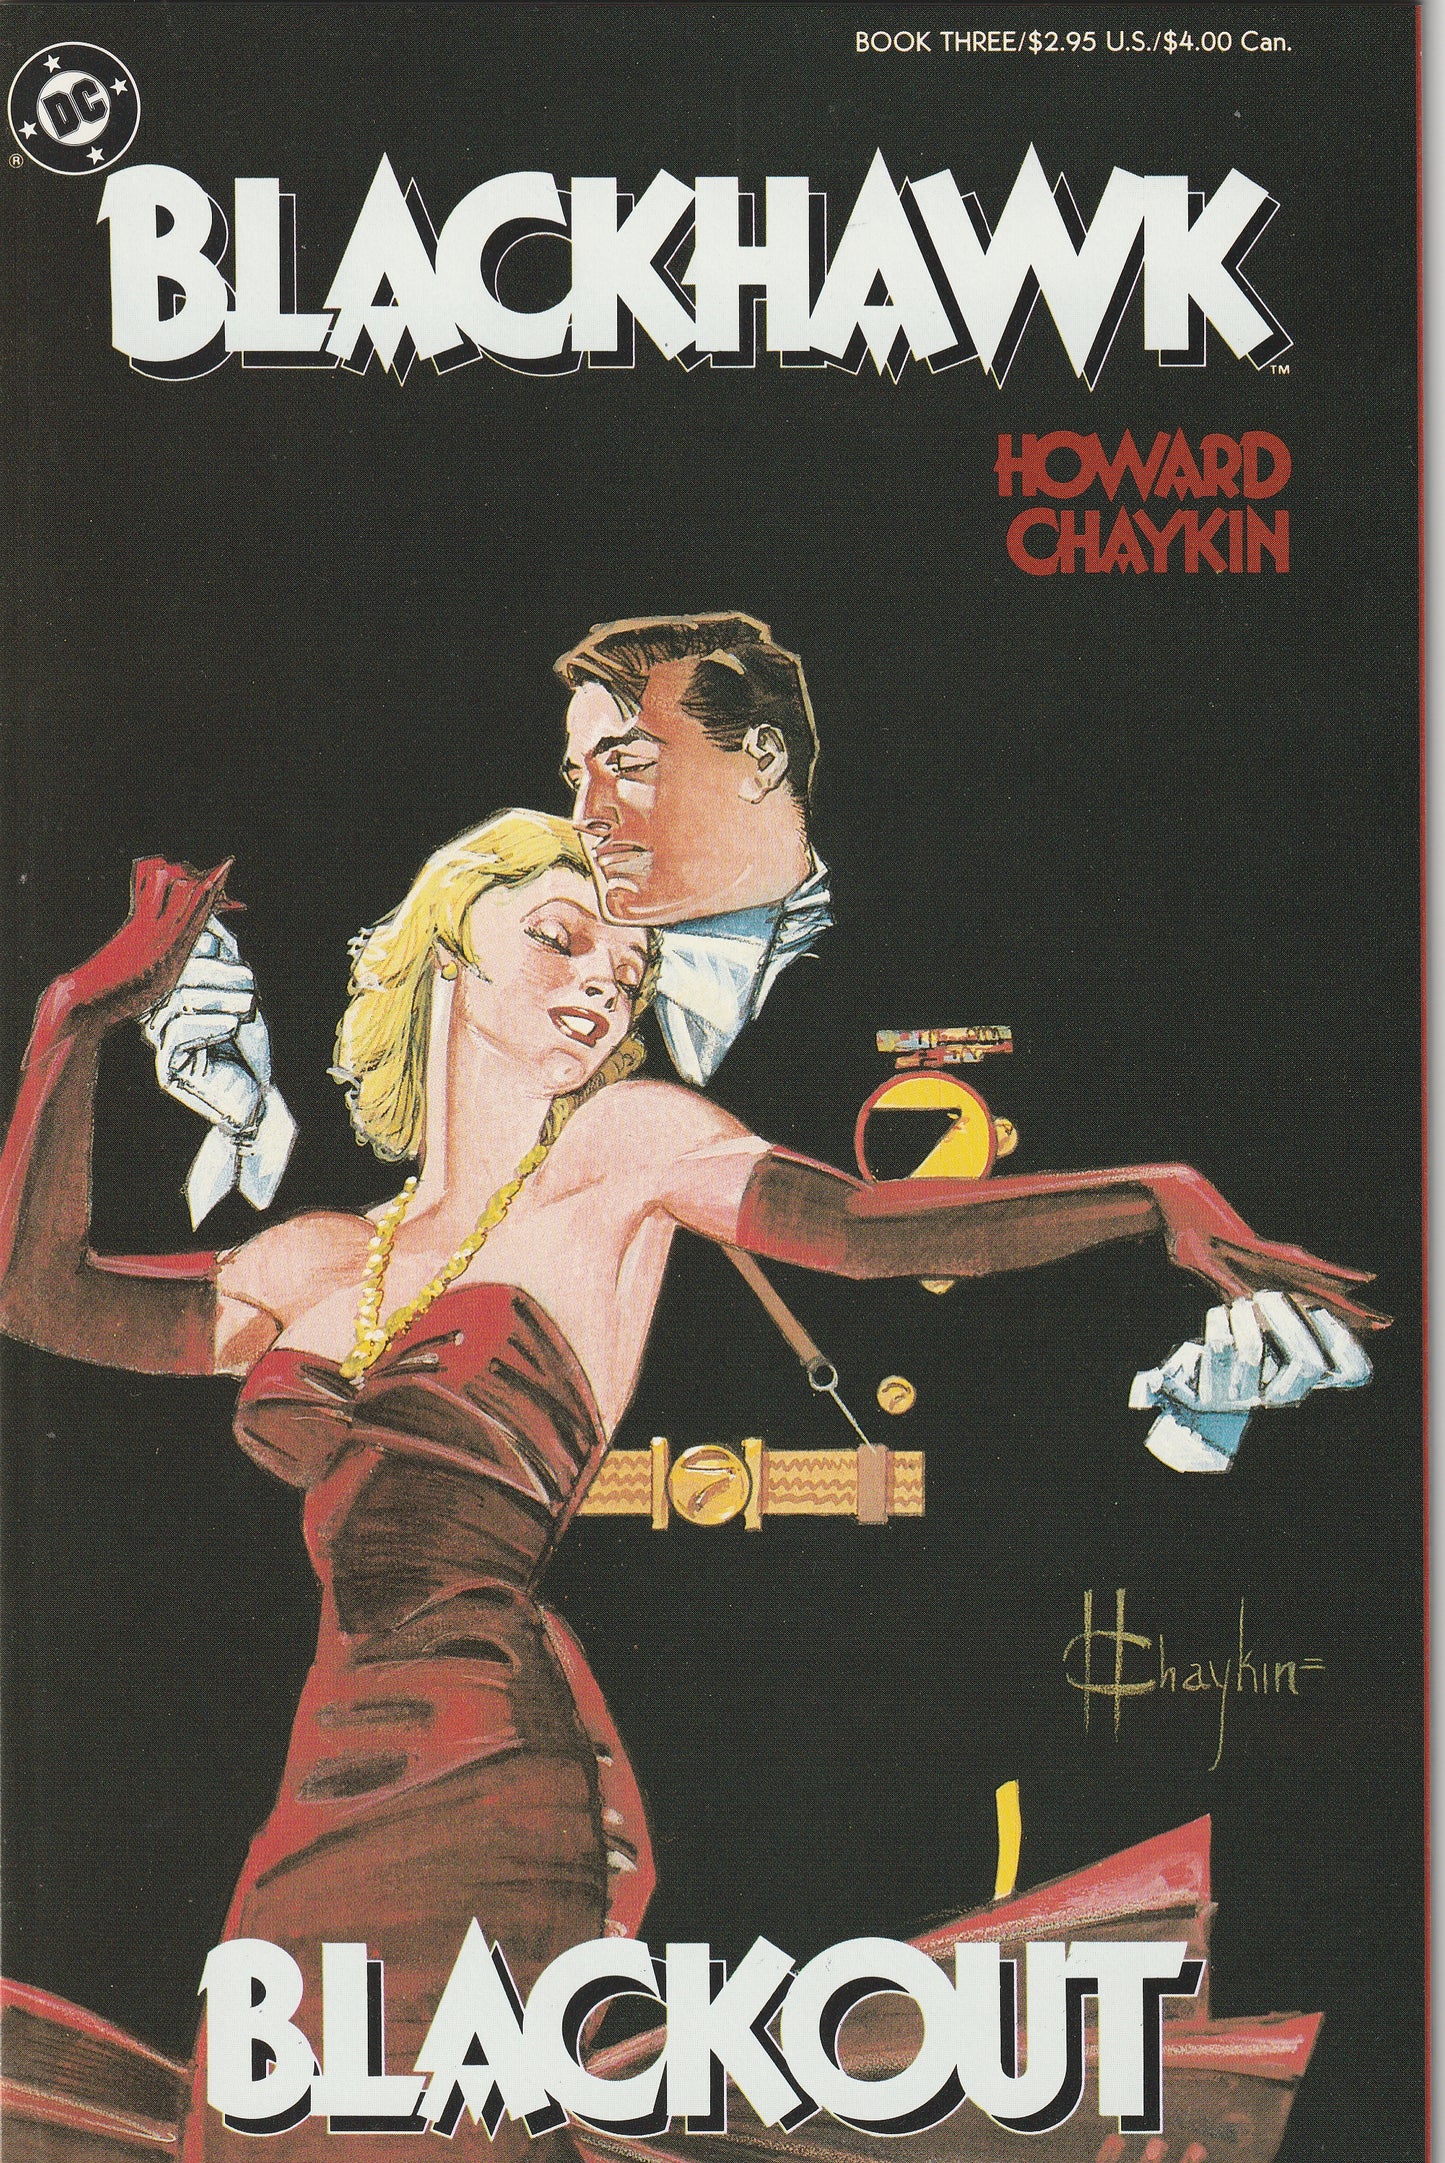 Blackhawk (1988) - Complete 3 issue mini-series - Howard Chaykin story and art